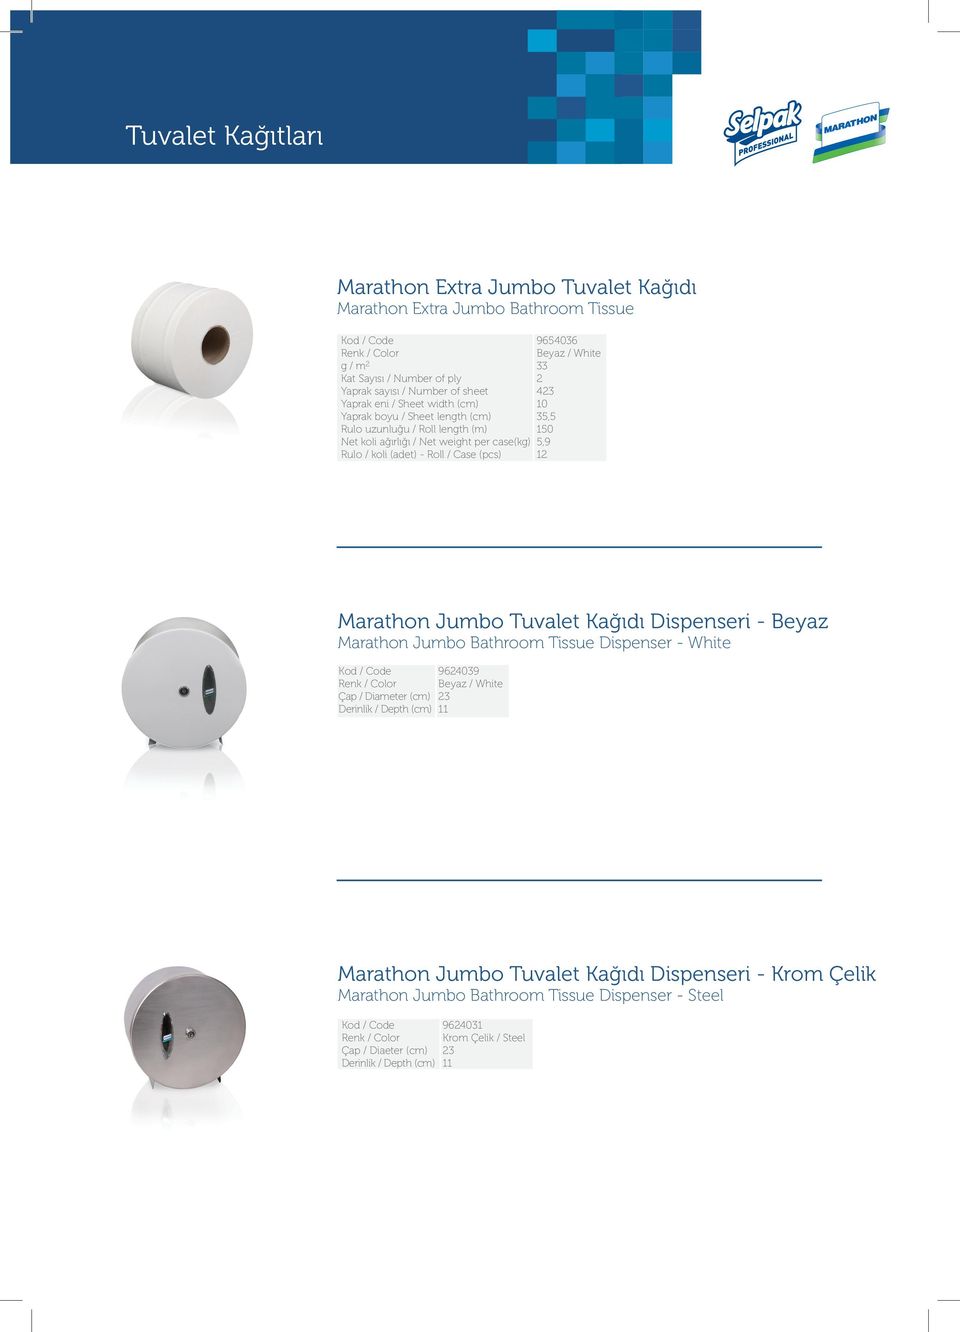 Dispenseri - Beyaz Marathon Jumbo Bathroom Tissue Dispenser - White Çap / Diameter (cm) 964039 3 11 Marathon Jumbo Tuvalet